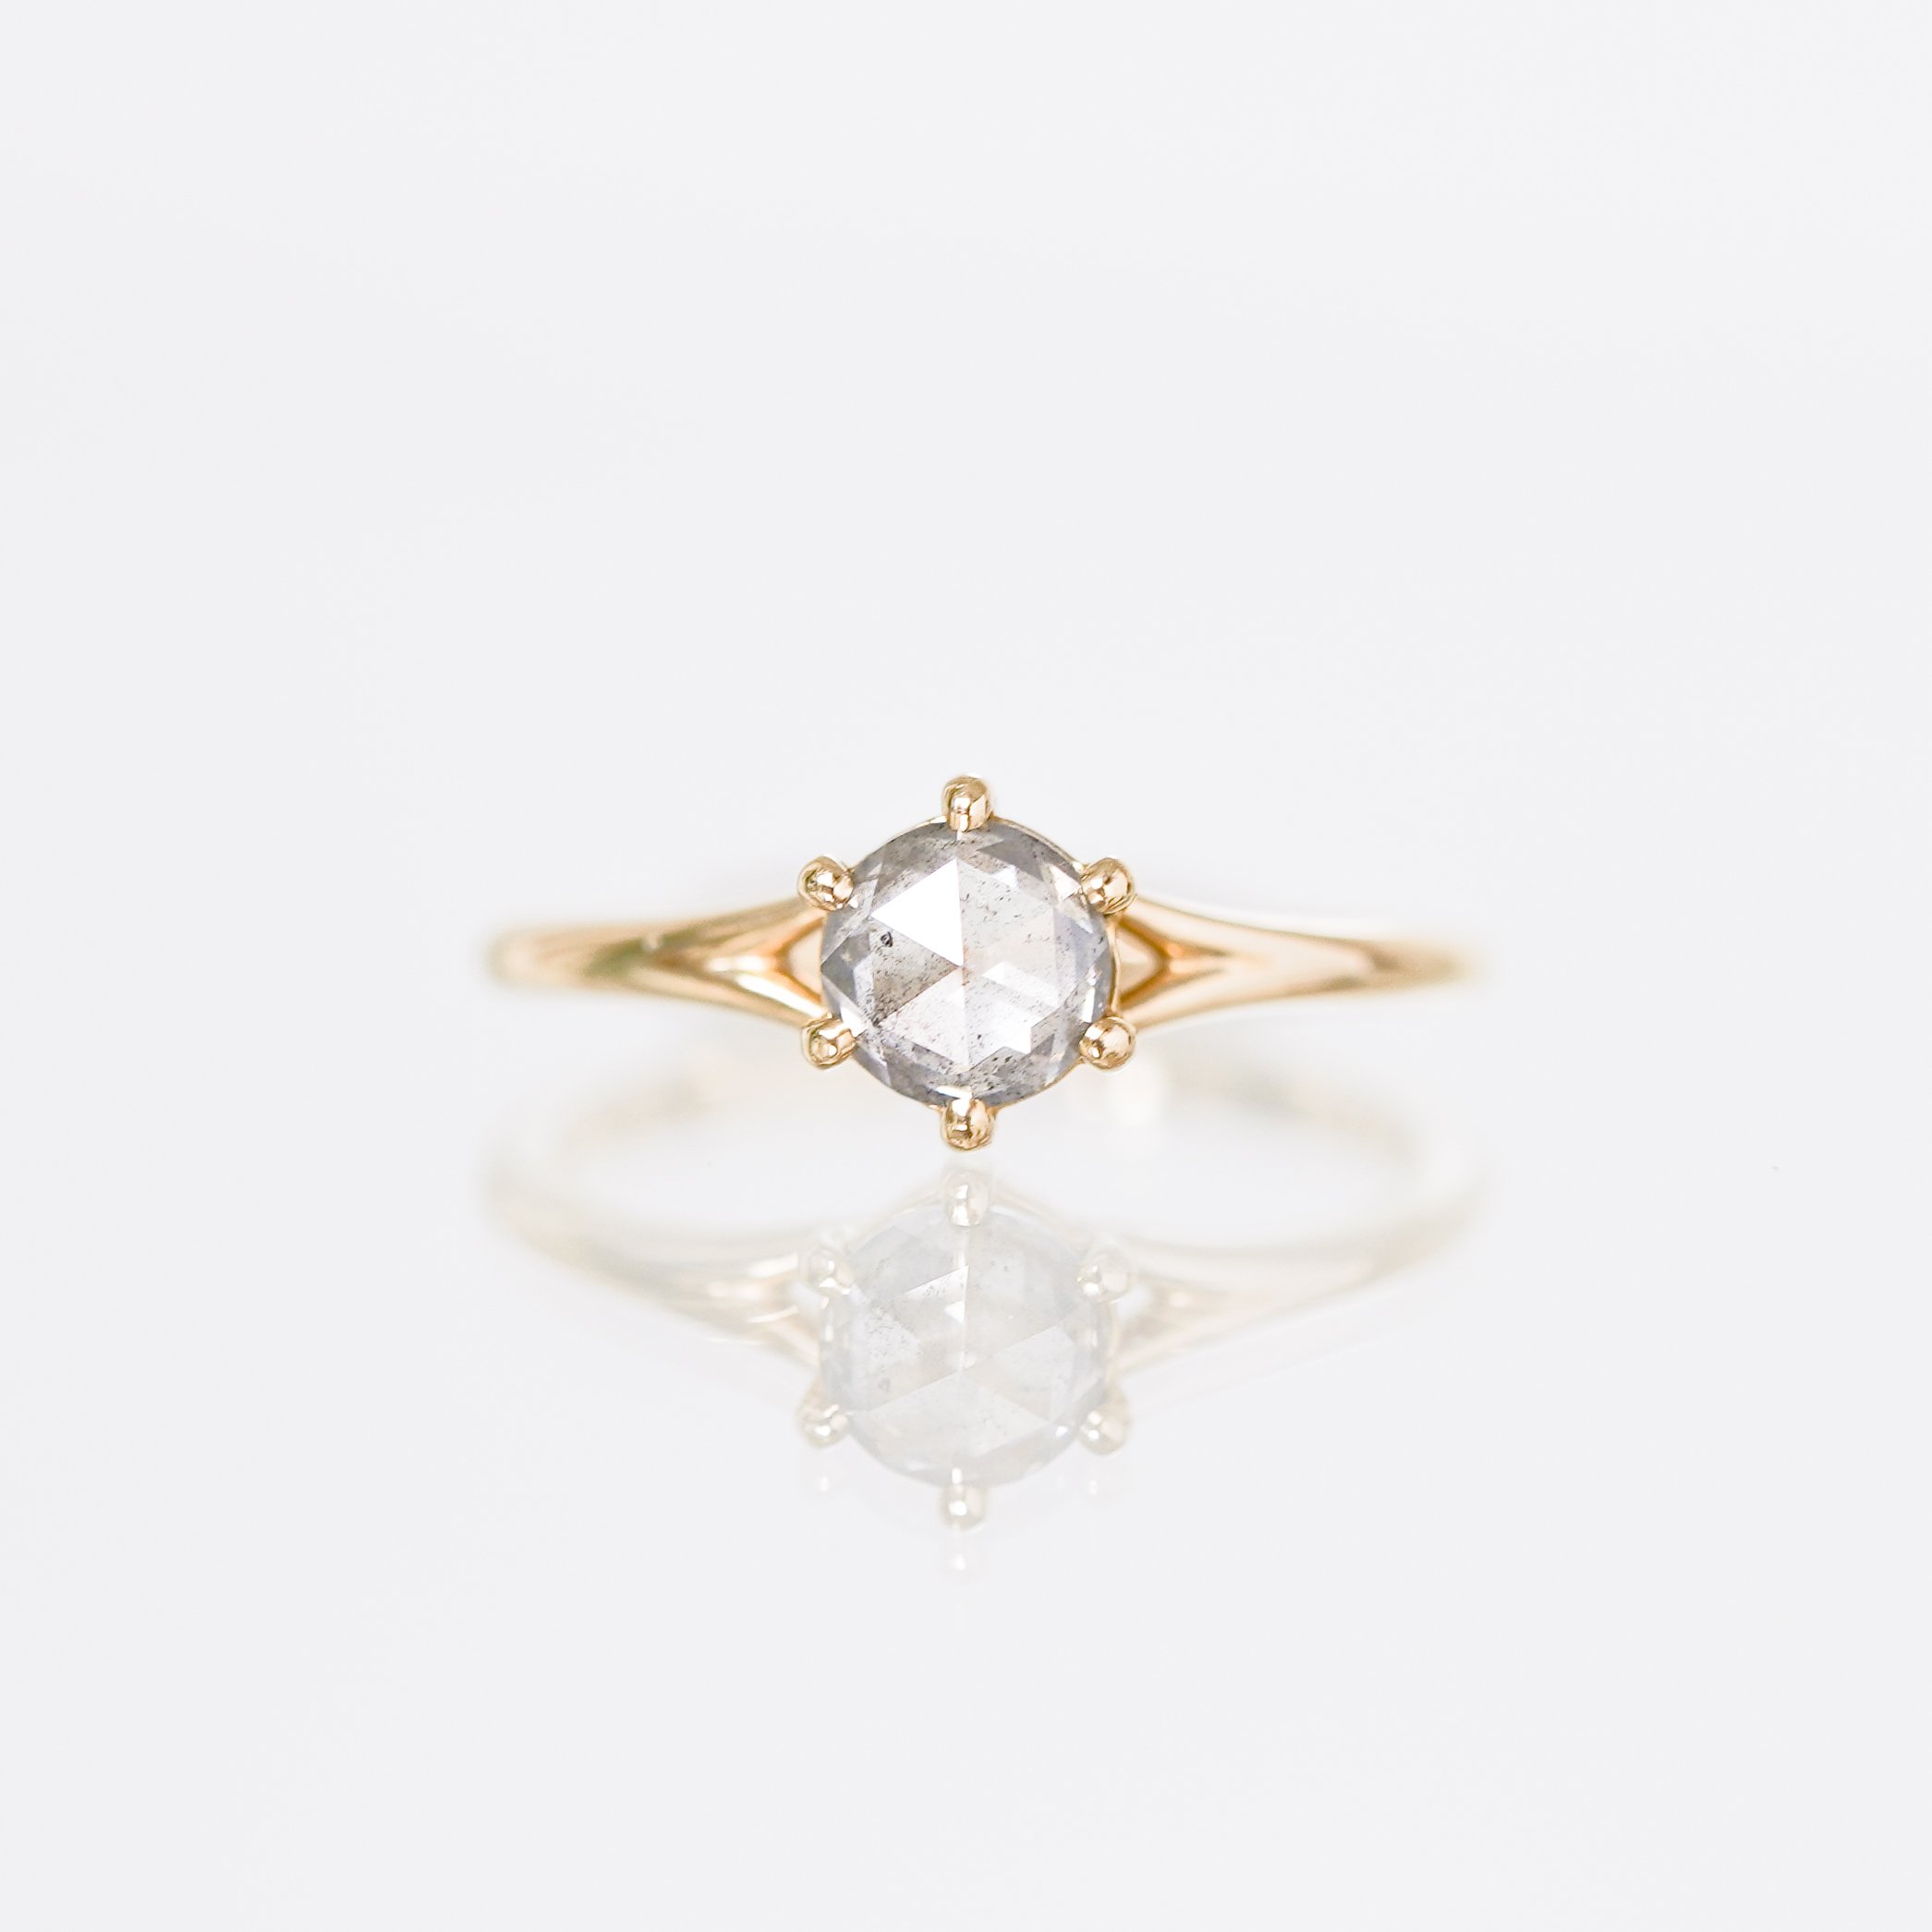 Emi Kite Australian Opal Ring 14K Gold Filled Rings for Women Gemstone  Crystal Statement Promise Minimalist Vintage Sterling Silver Art Deco -  Etsy Hong Kong